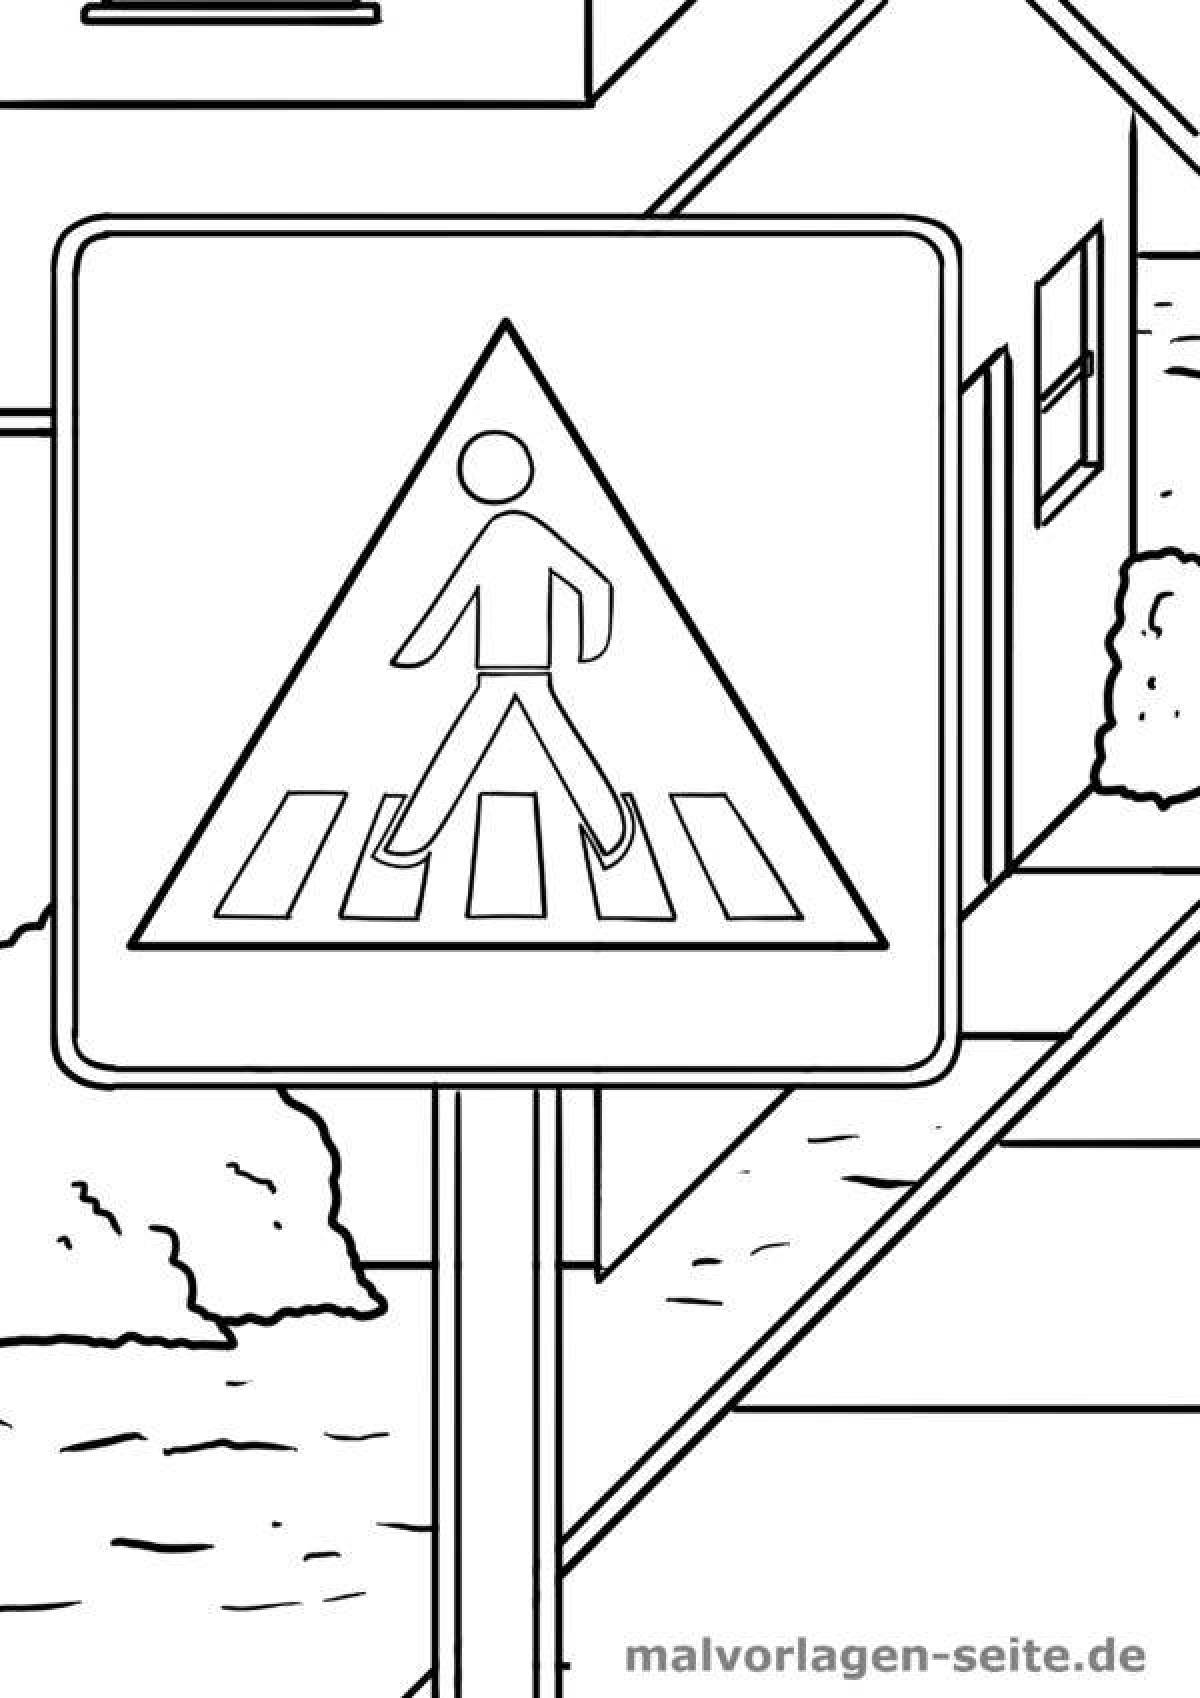 Crossing sign for children #3